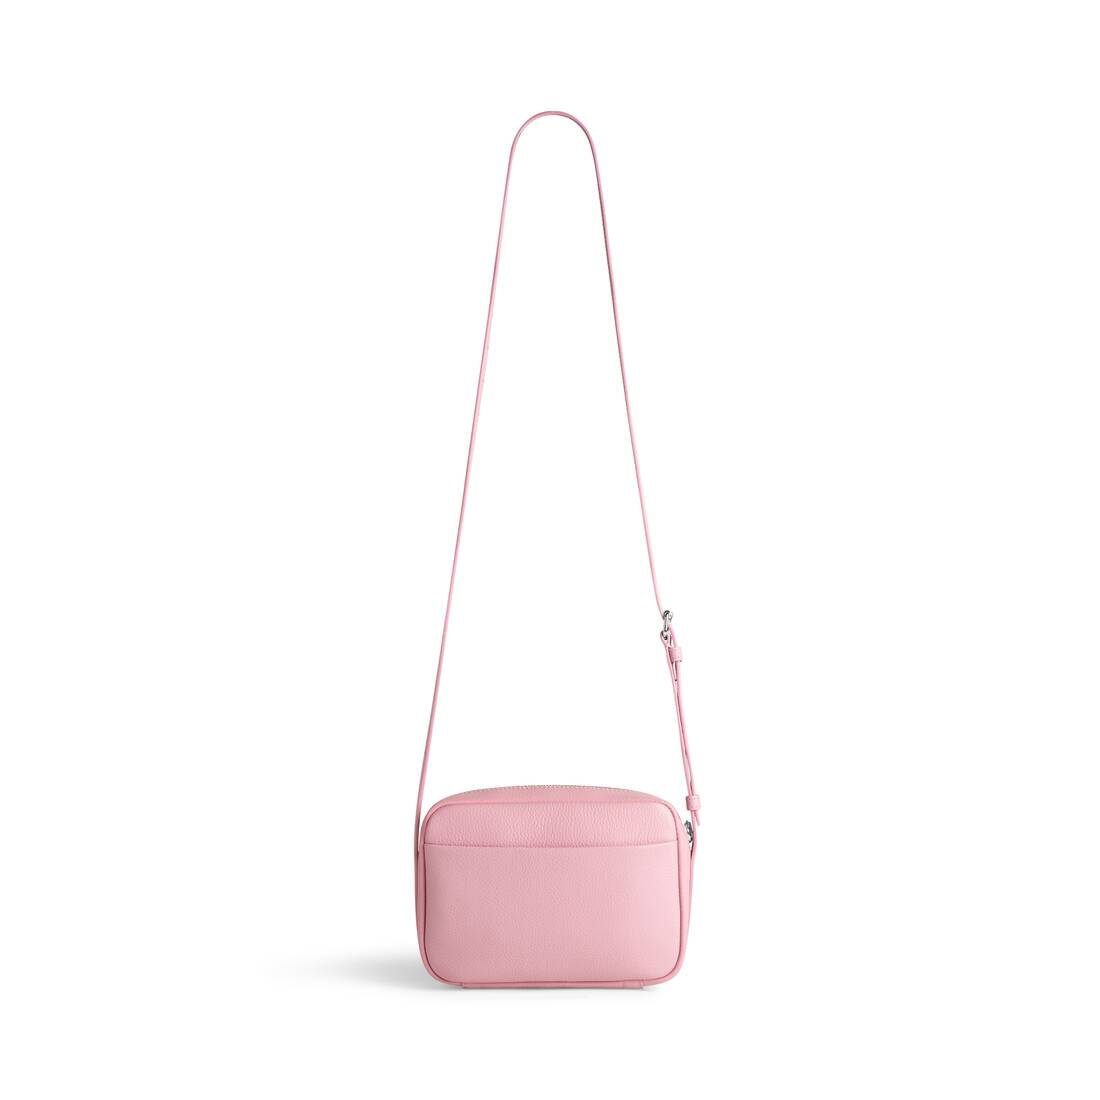 Balenciaga Logo Printed Mini Shopping Bag in Pink